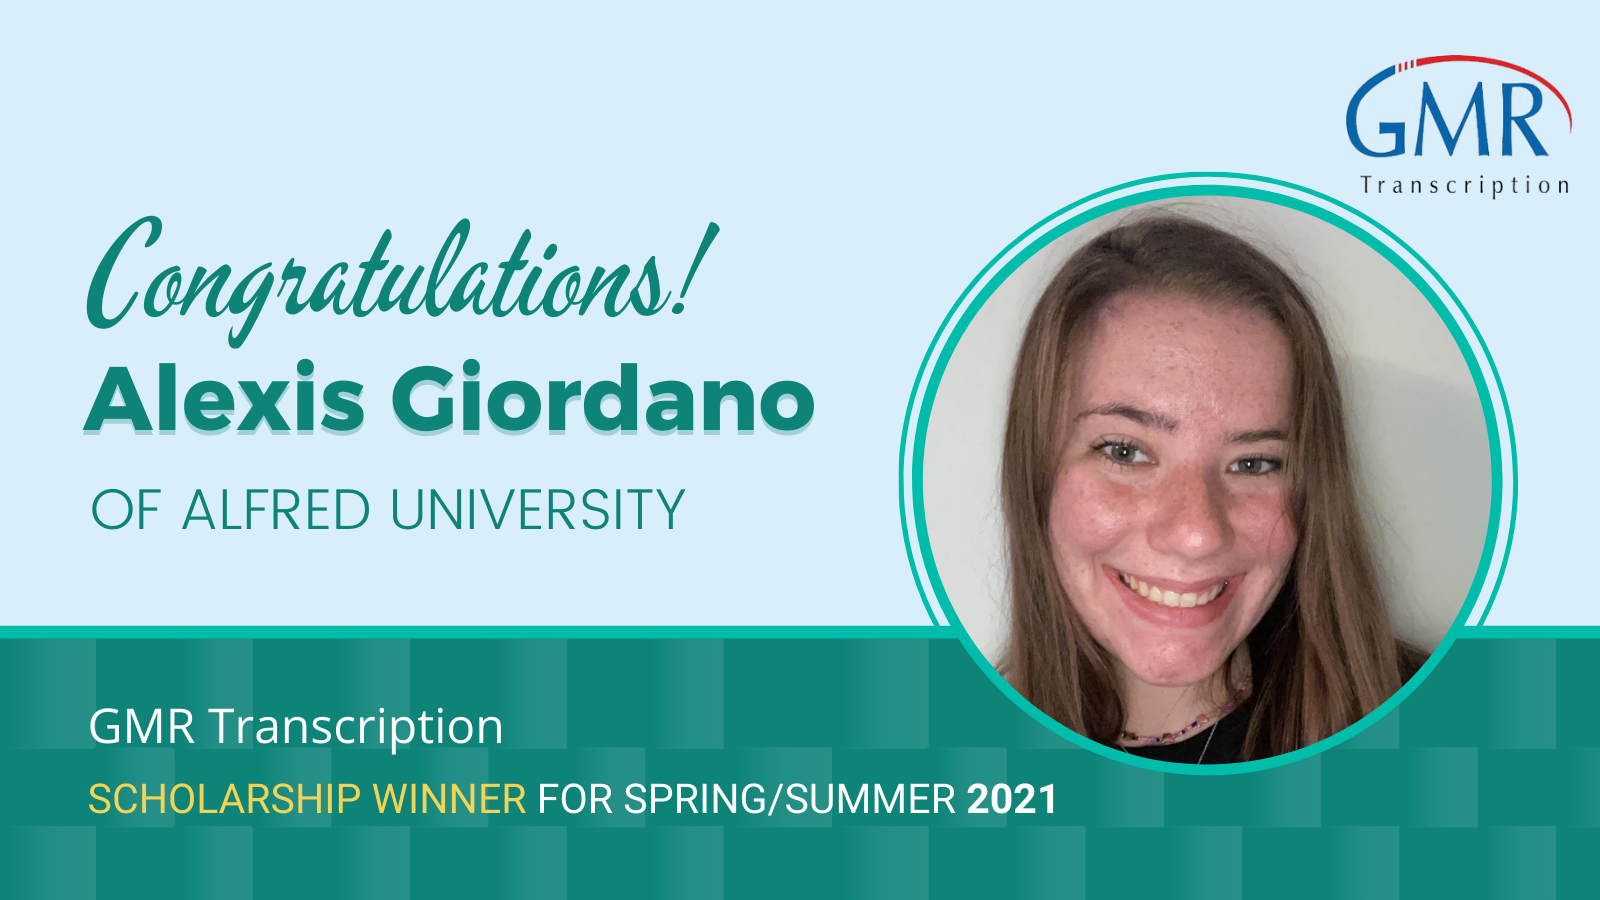 Alexis Giordano, Our GMR Transcription Scholarship Winner from Alfred University